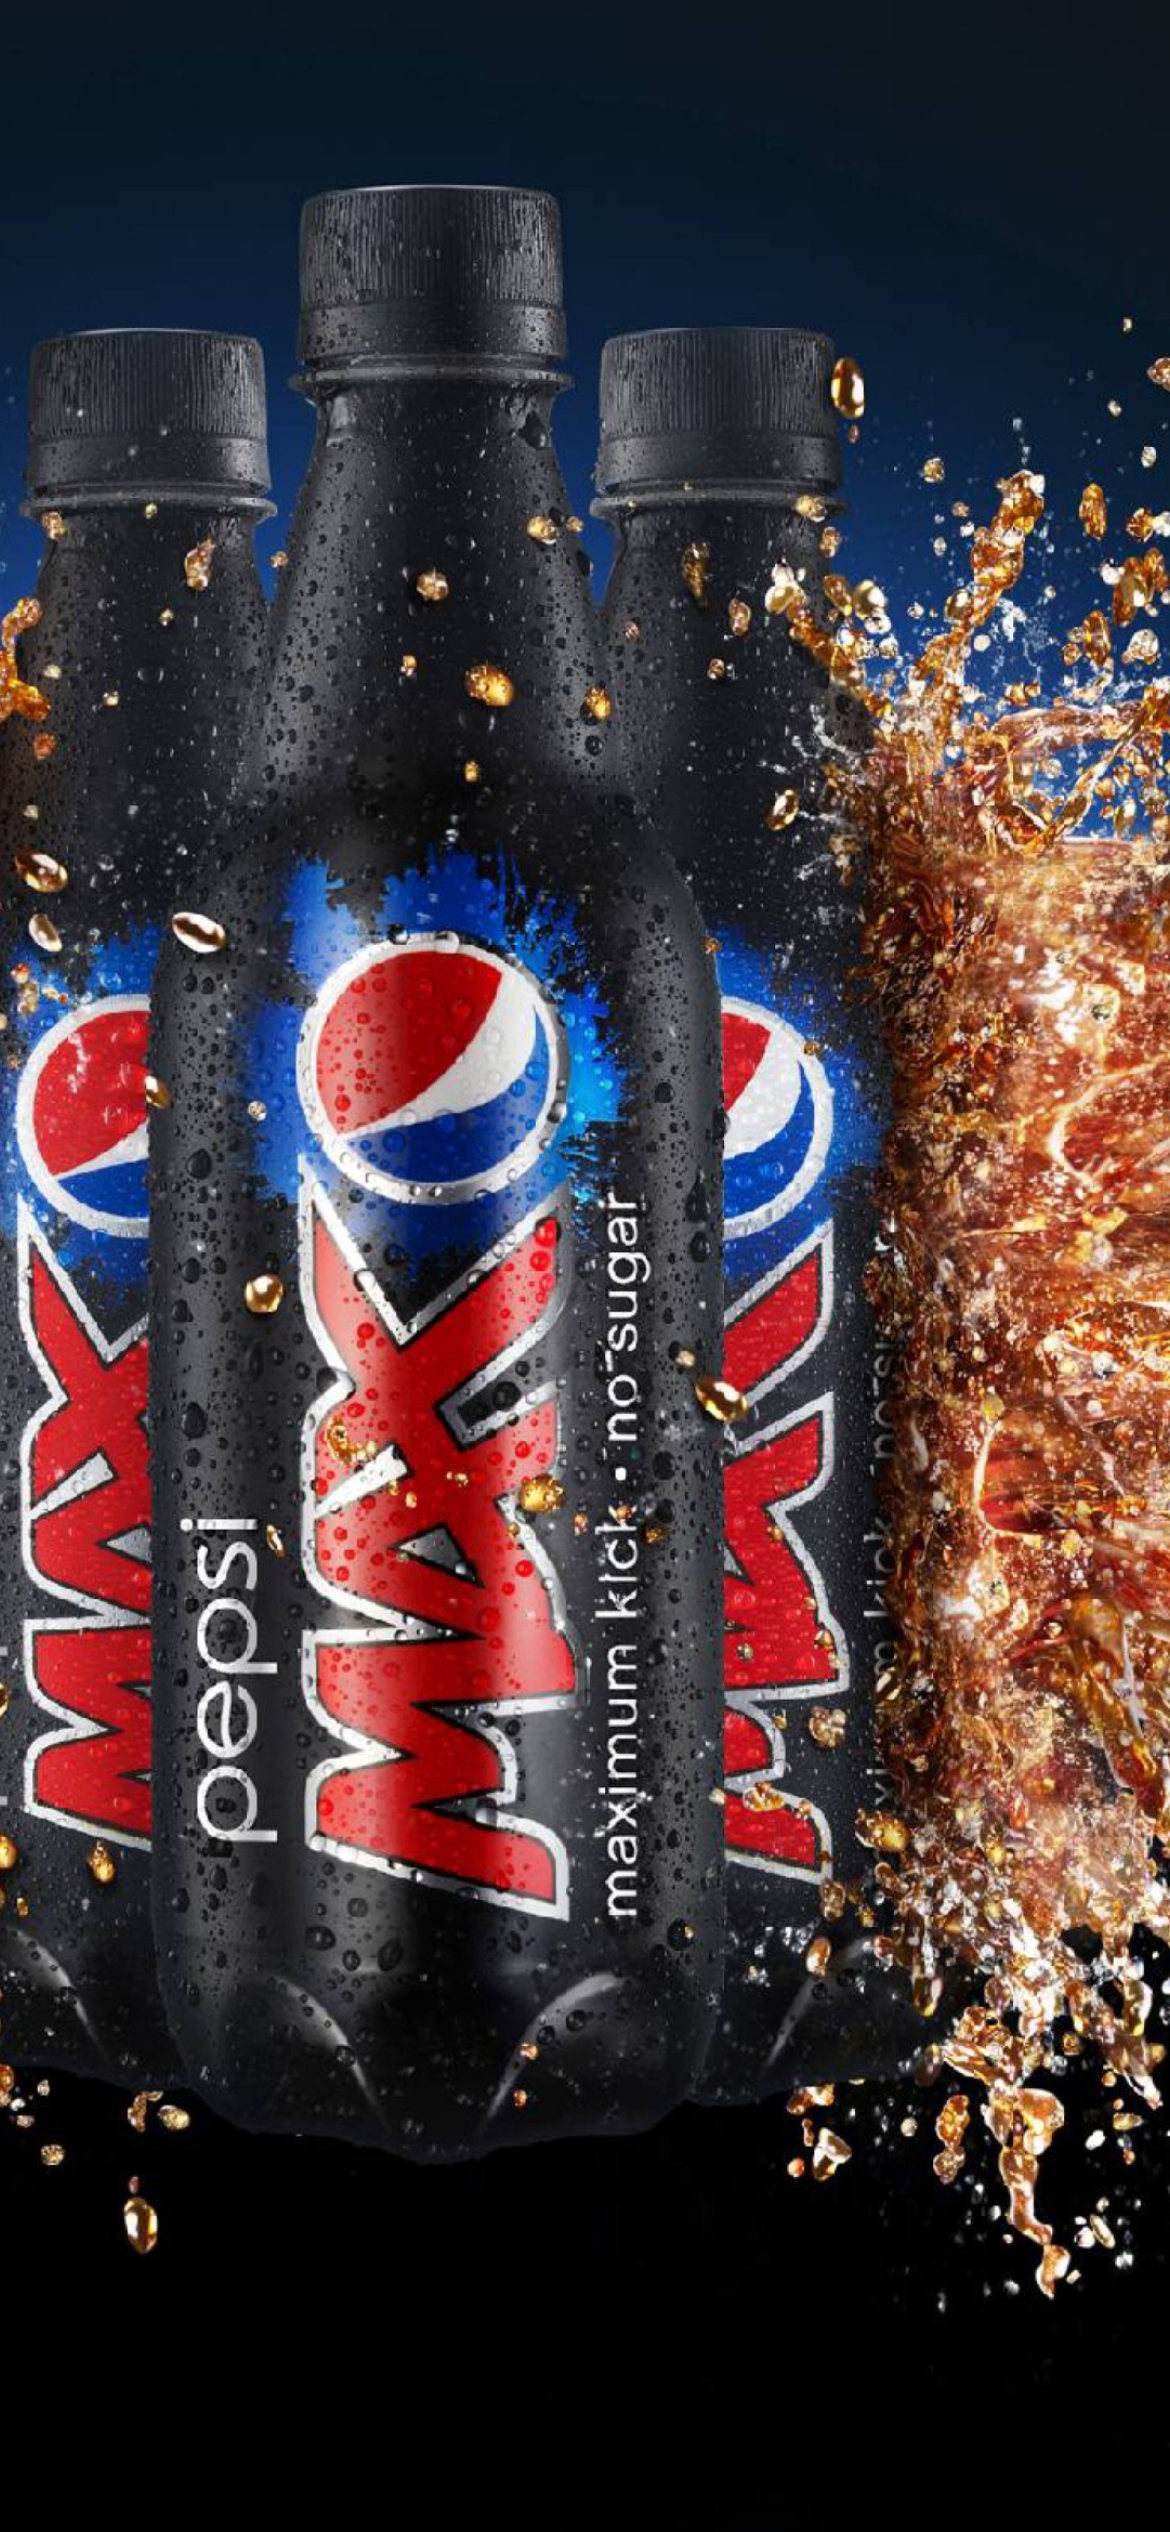 Pepsi Max wallpaper 1170x2532